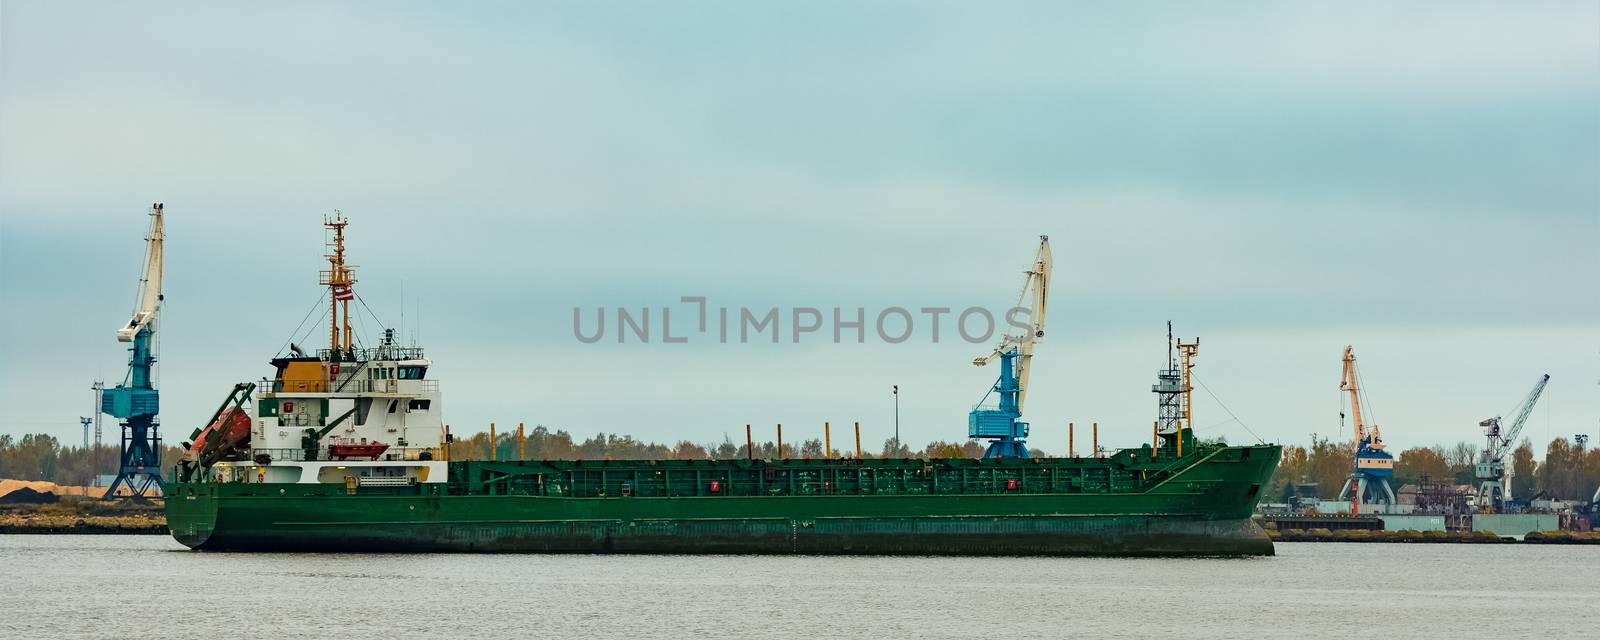 Green cargo ship by sengnsp